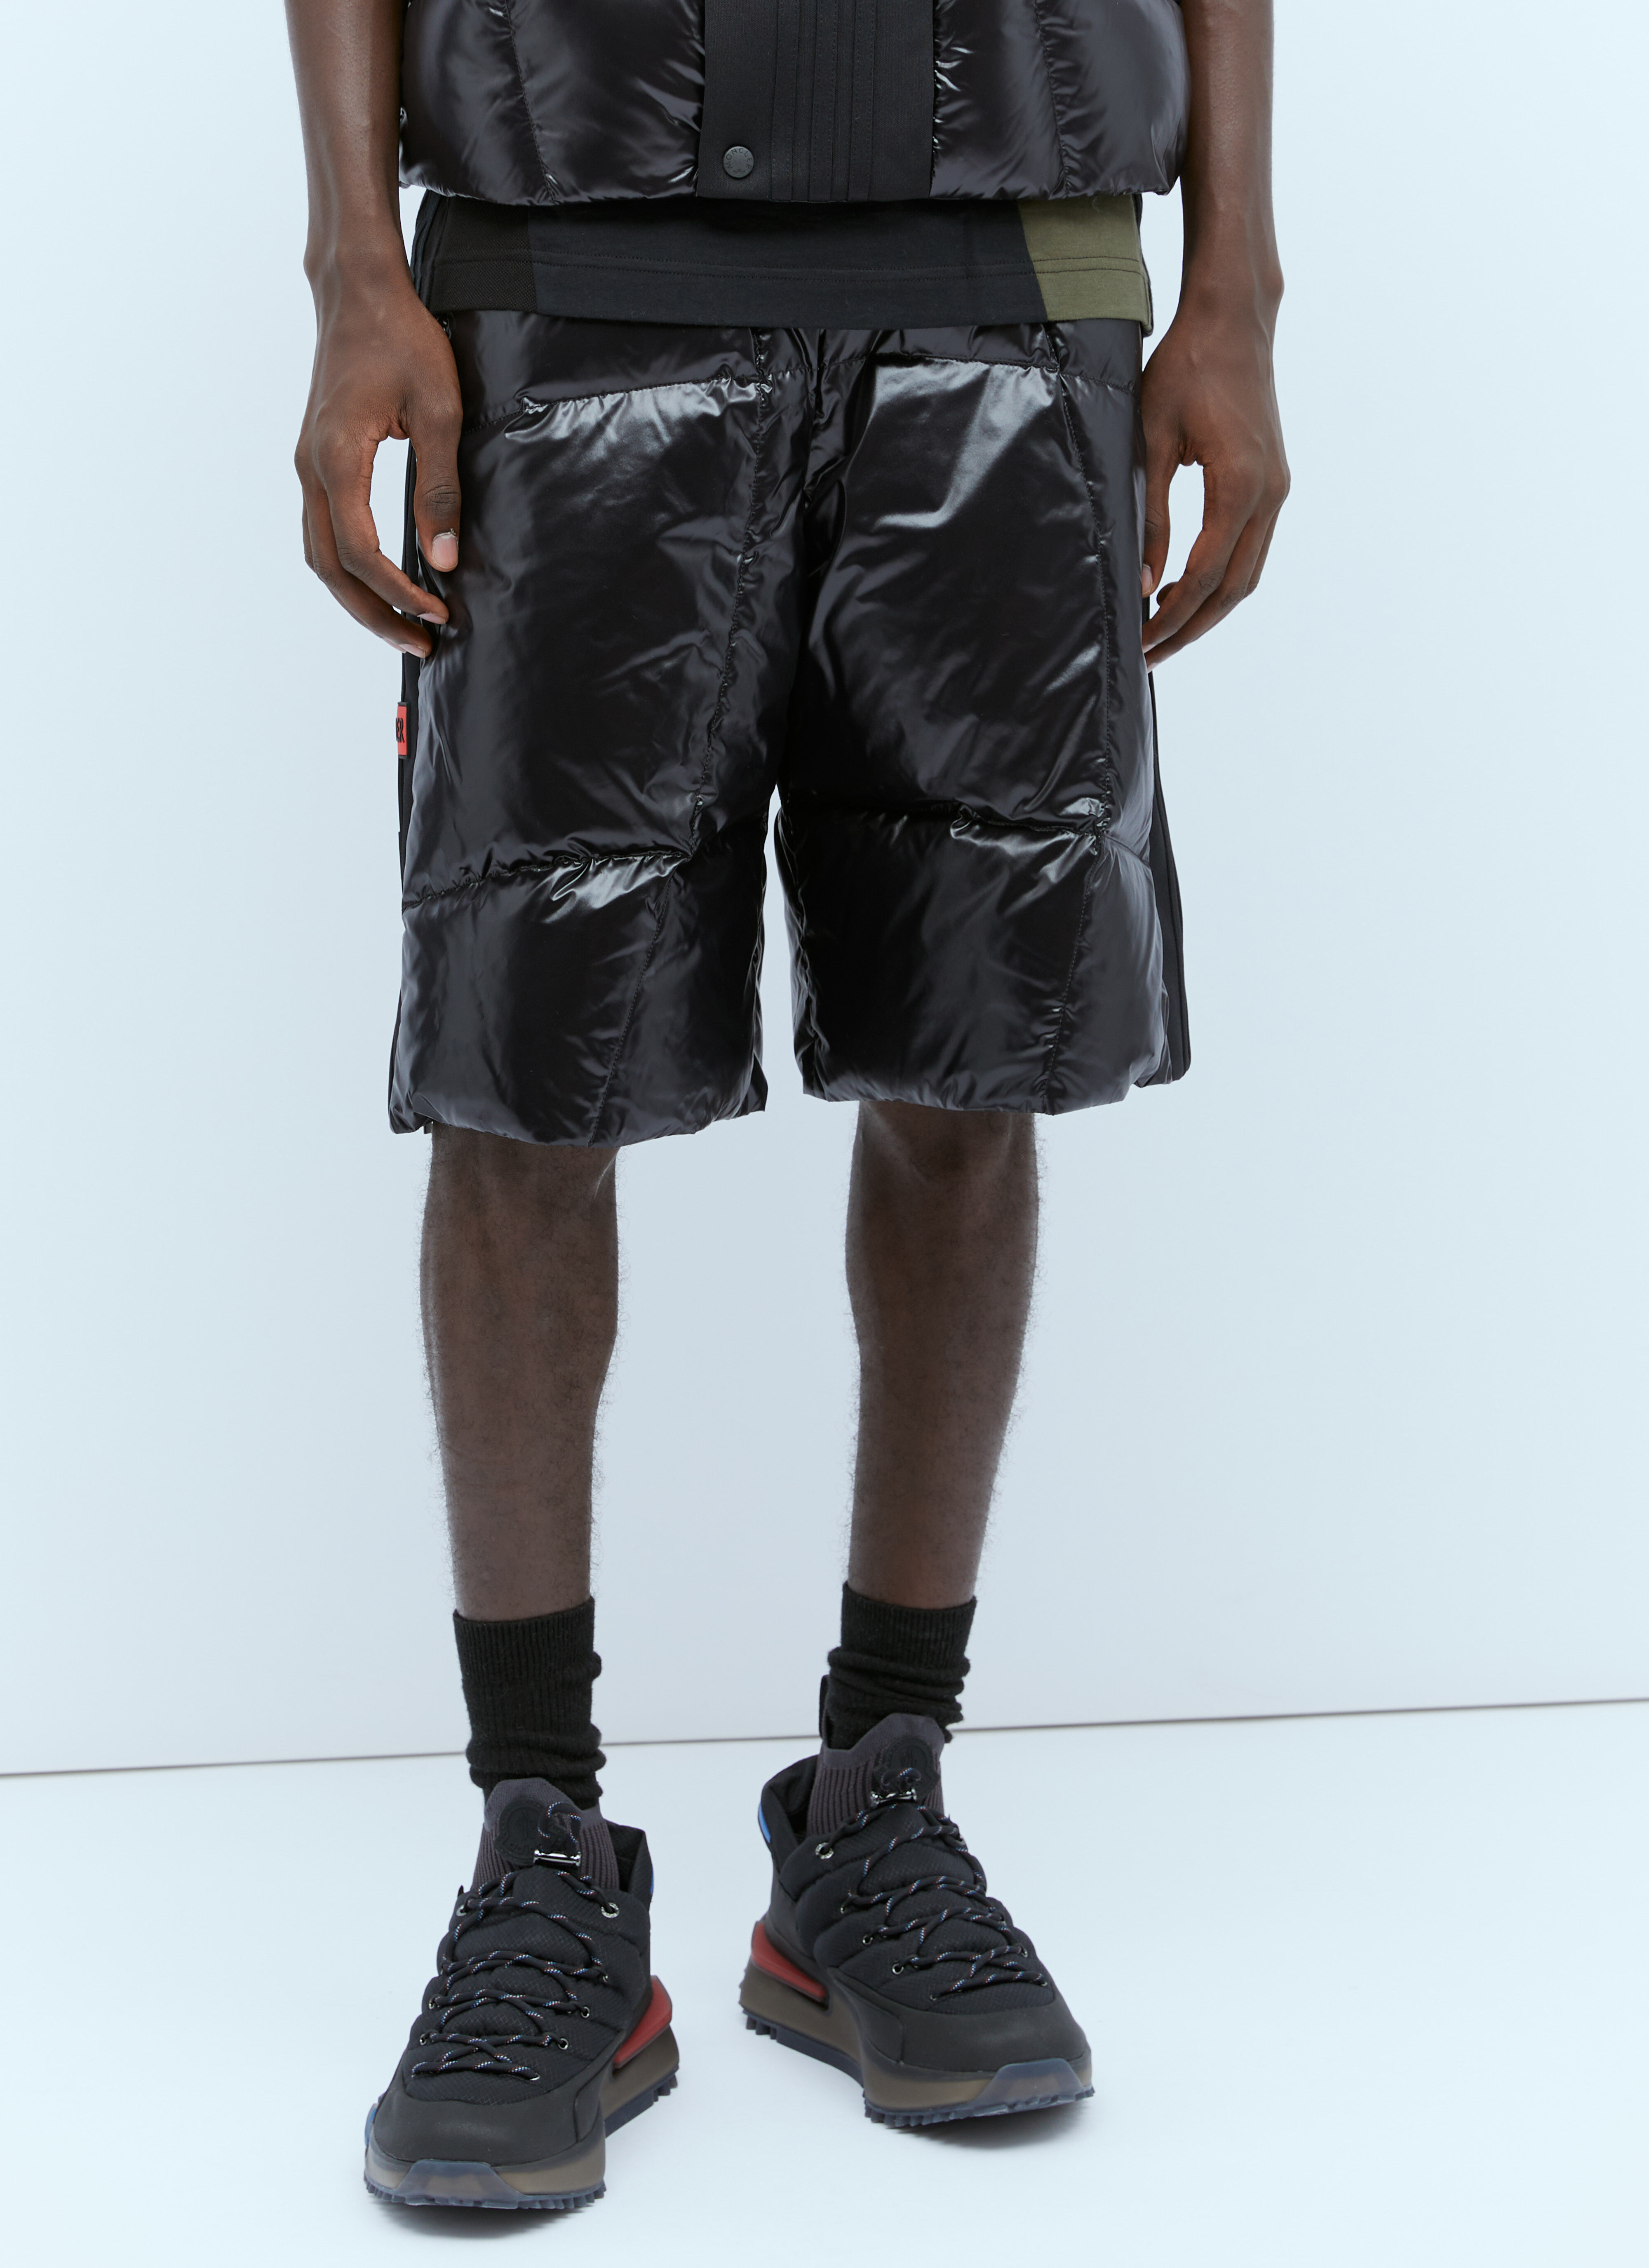 Moncler x Roc Nation designed by Jay-Z ダウン トラックショーツ ブラック mrn0156002